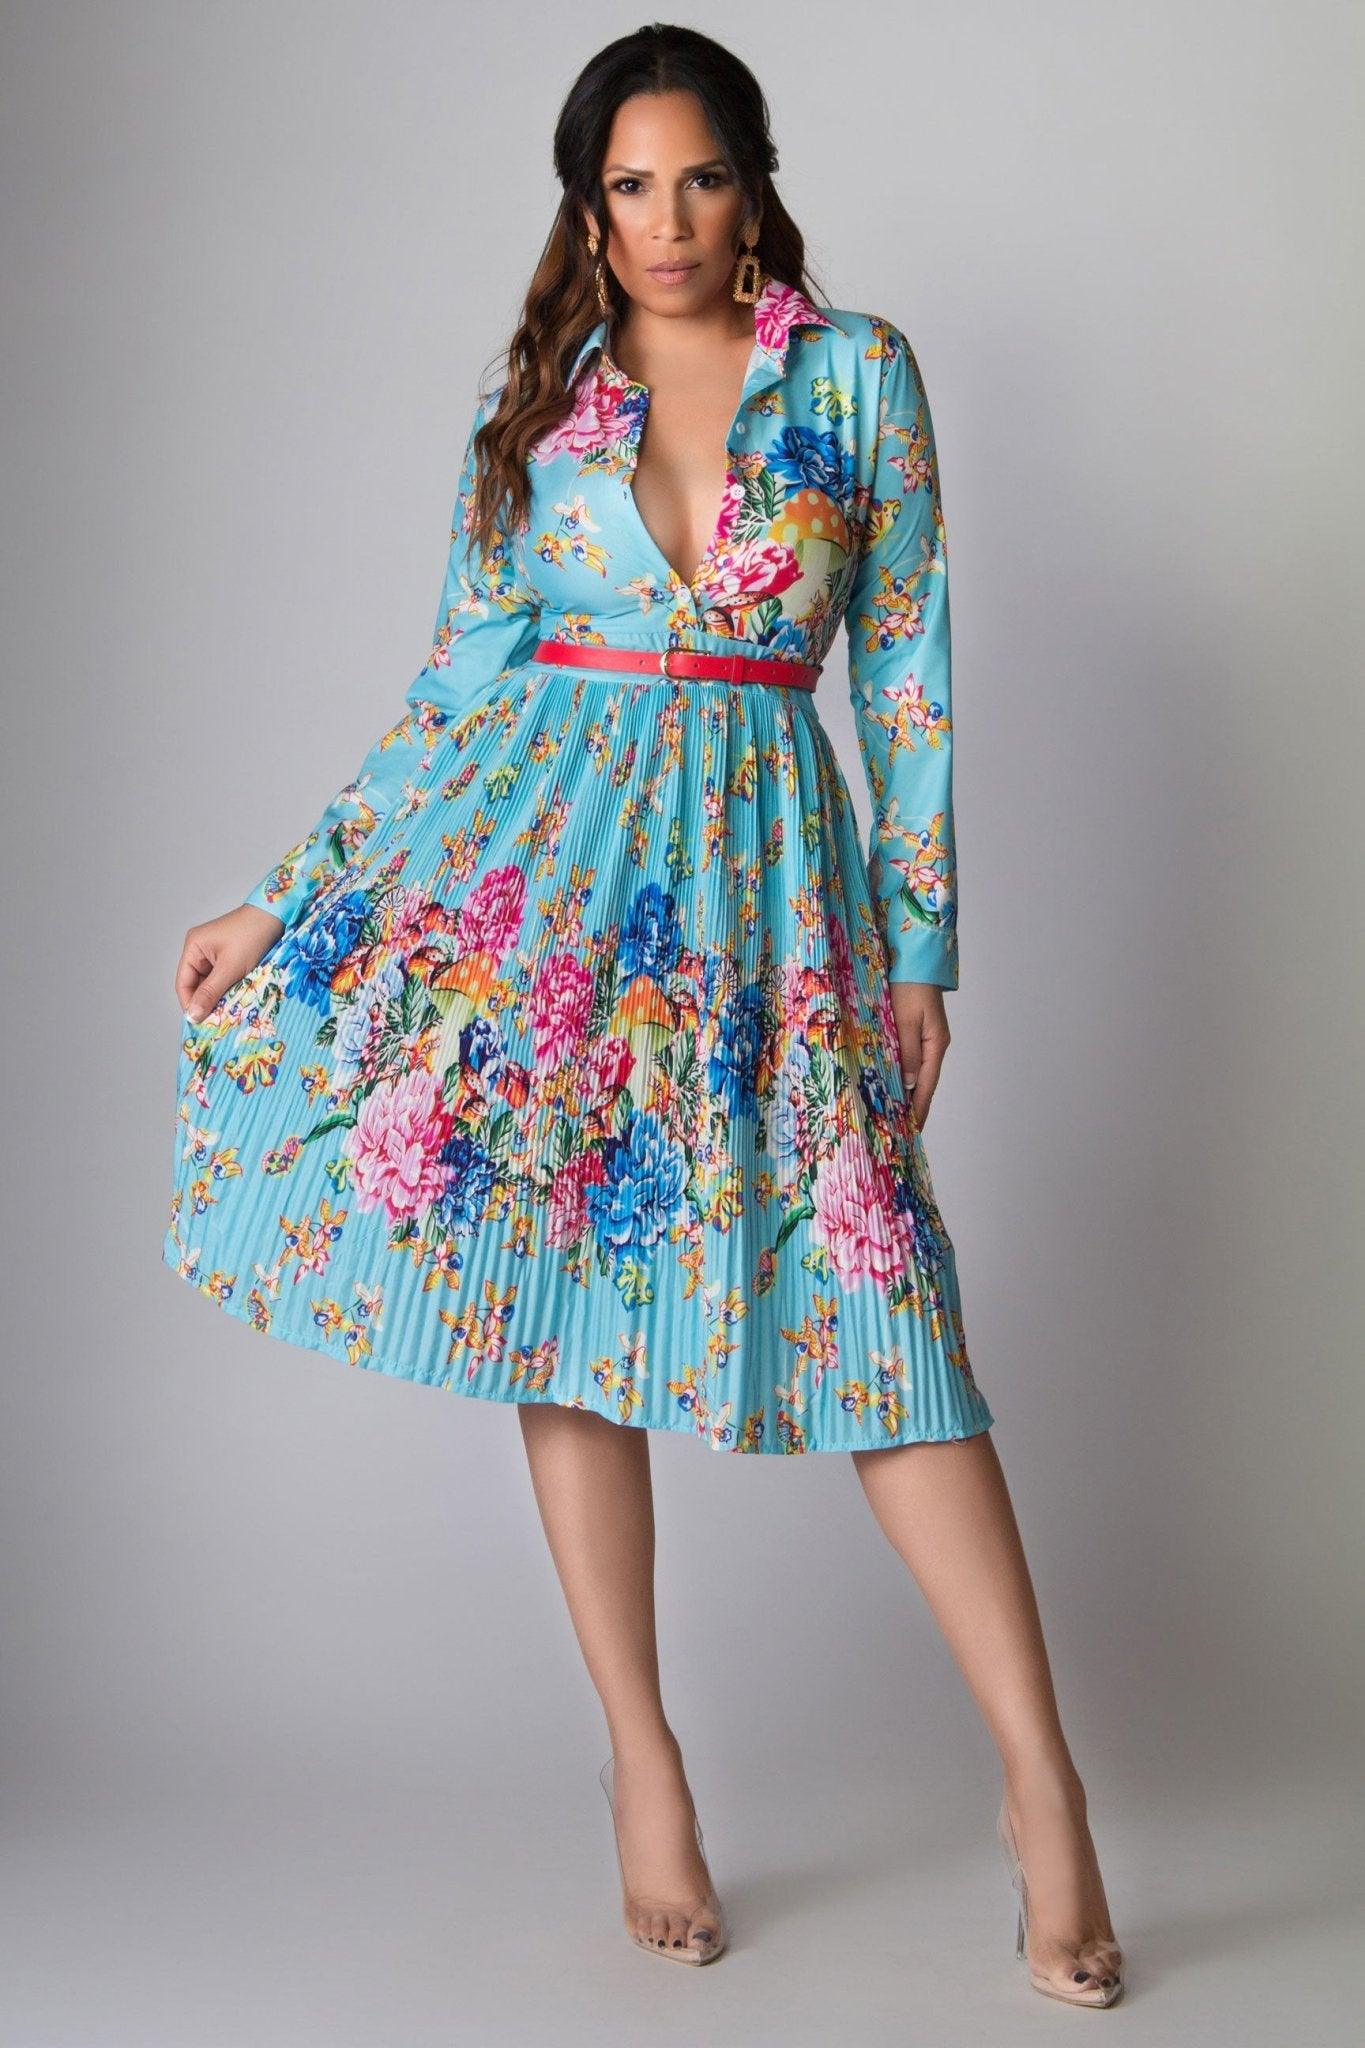 Elliott Floral Print Pleated Skirt Belted Classy Midi Dress - MY SEXY STYLES